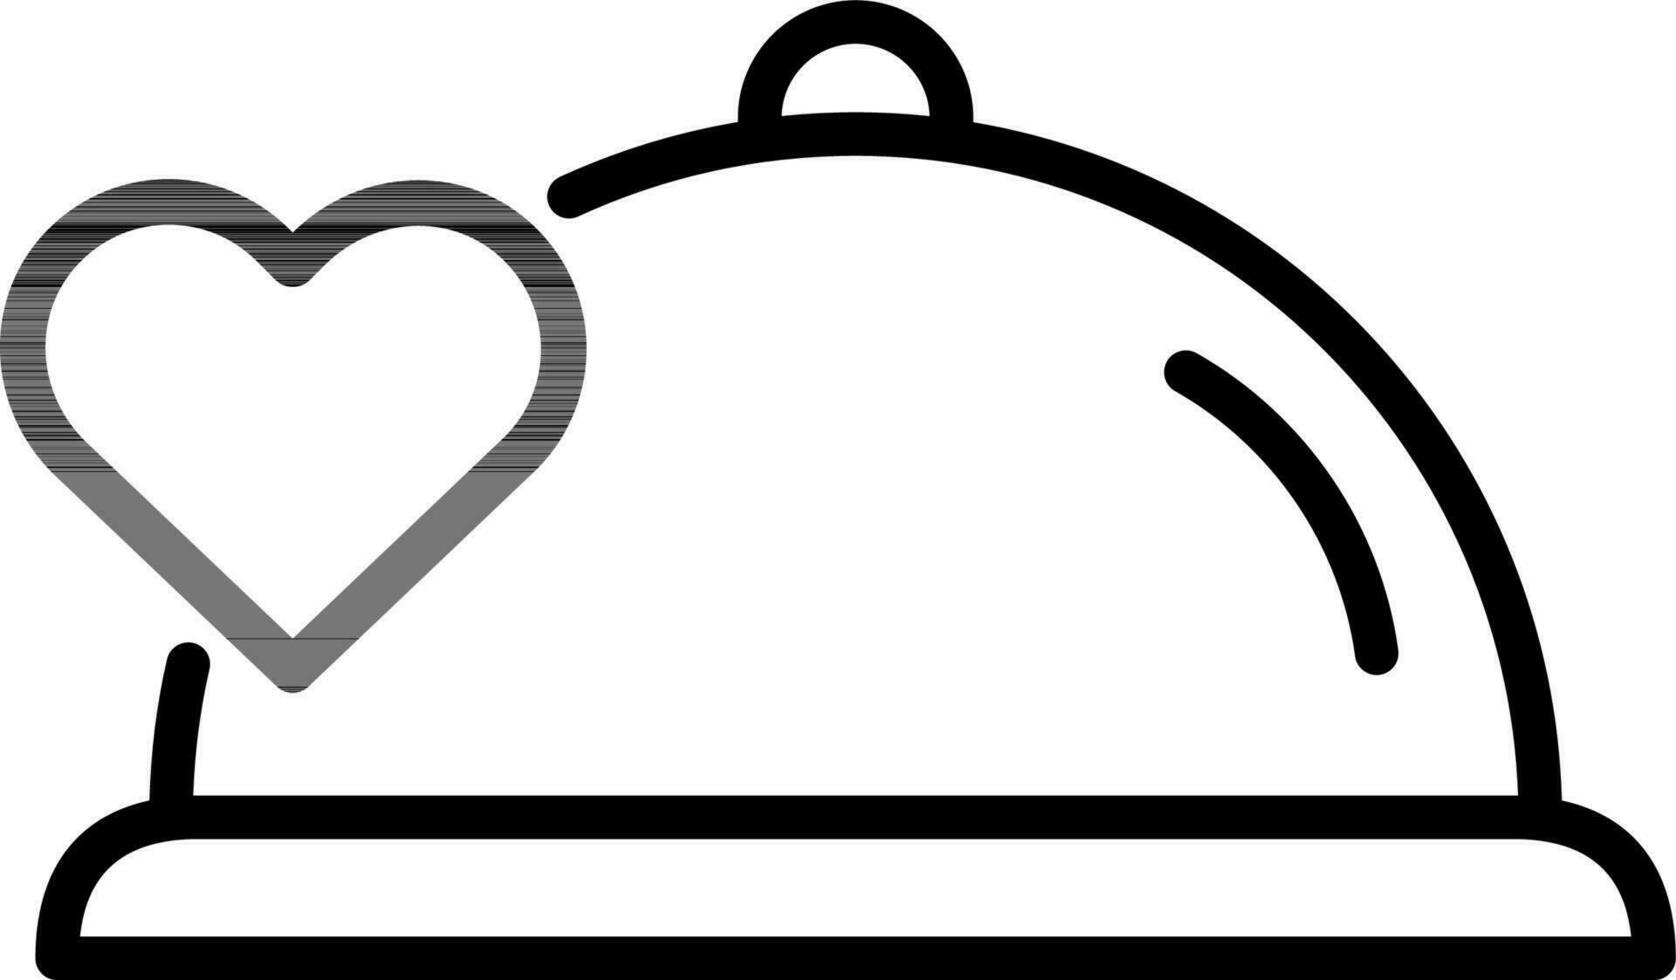 Black line art illustration of Heart symbol with cloche icon. vector